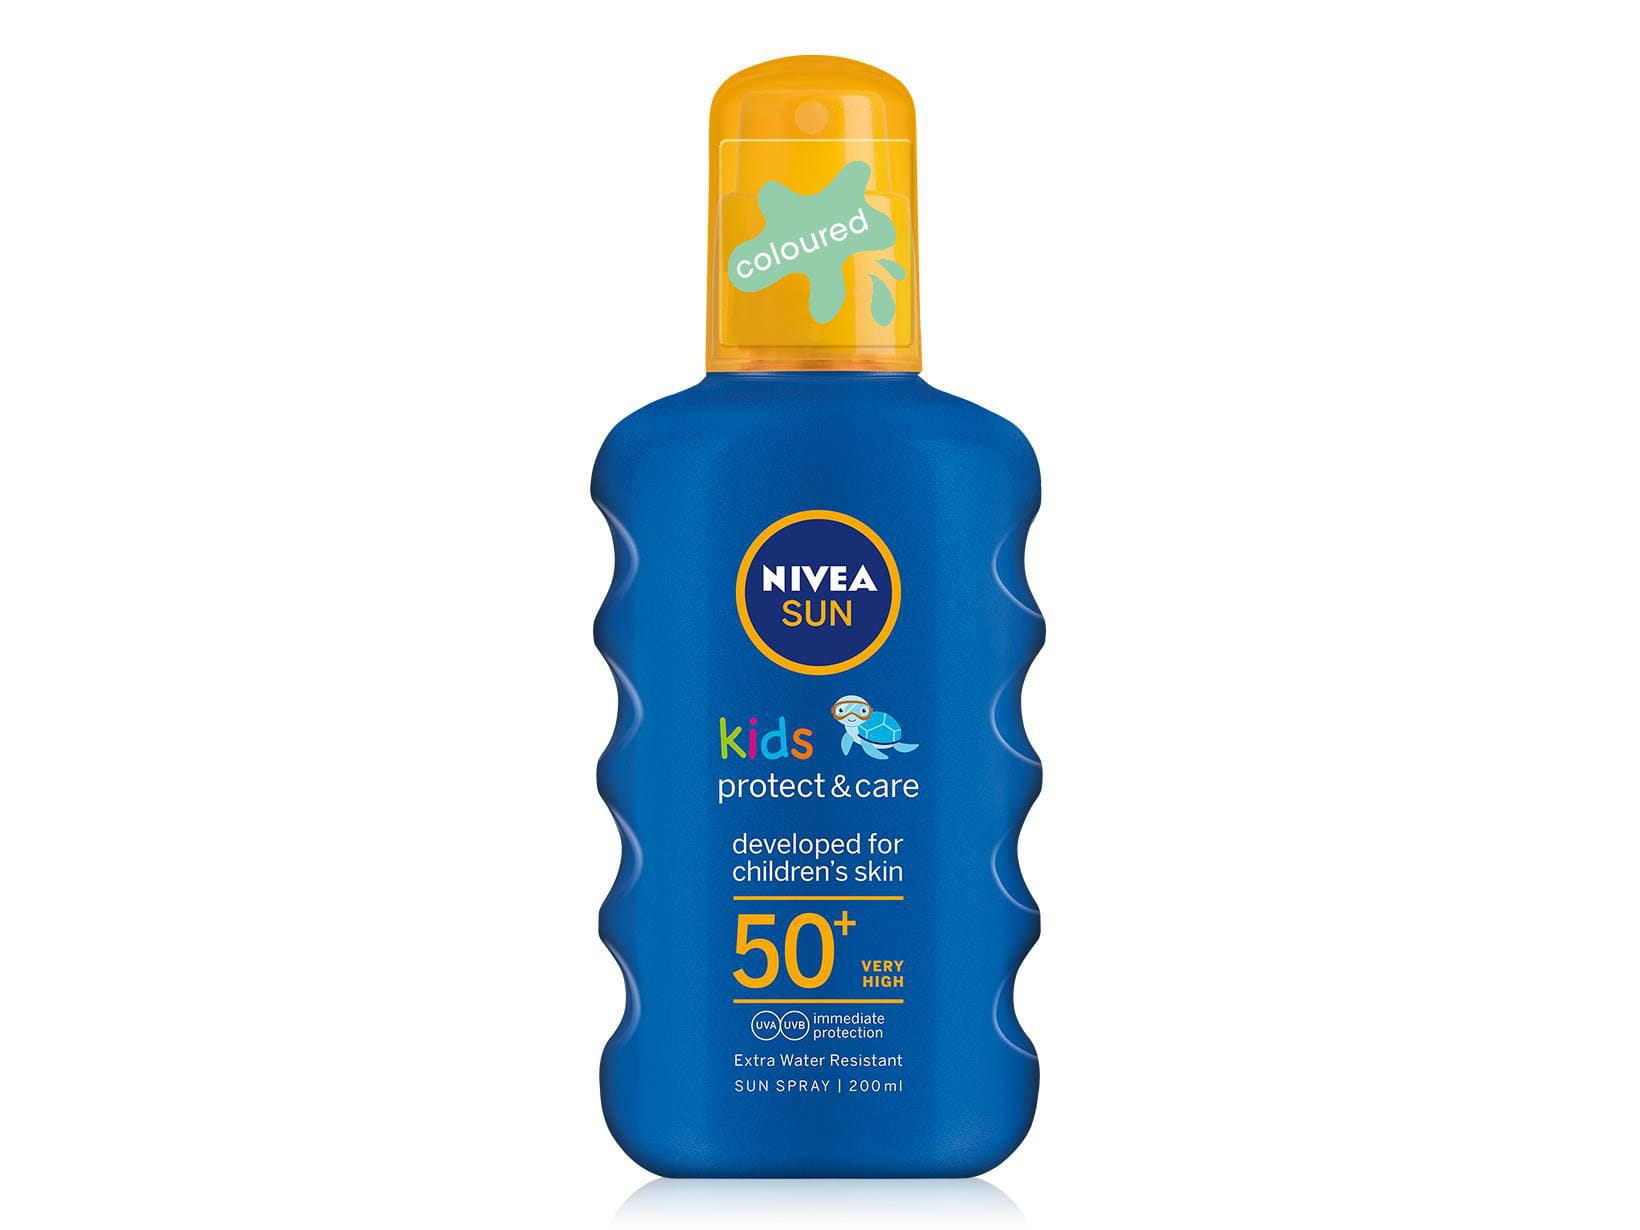 NIVEA SUN Kids Protect & Care spray